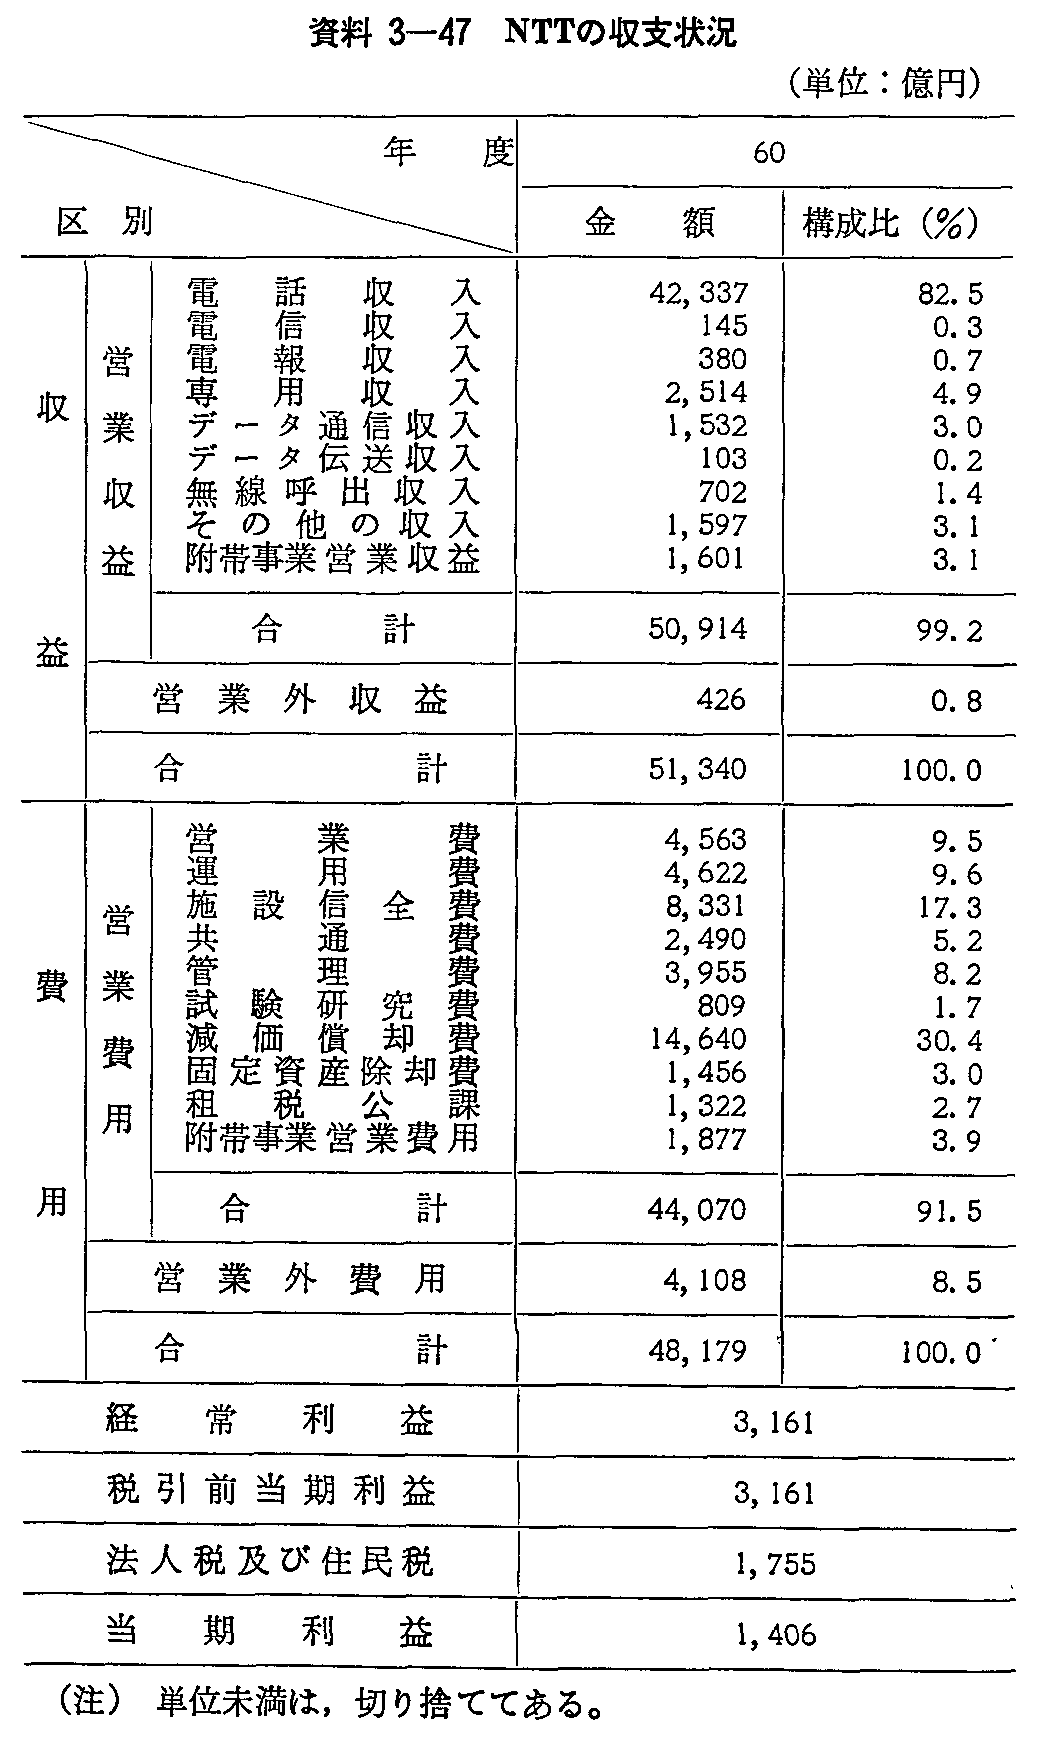 資料3-47 NTTの収支状況